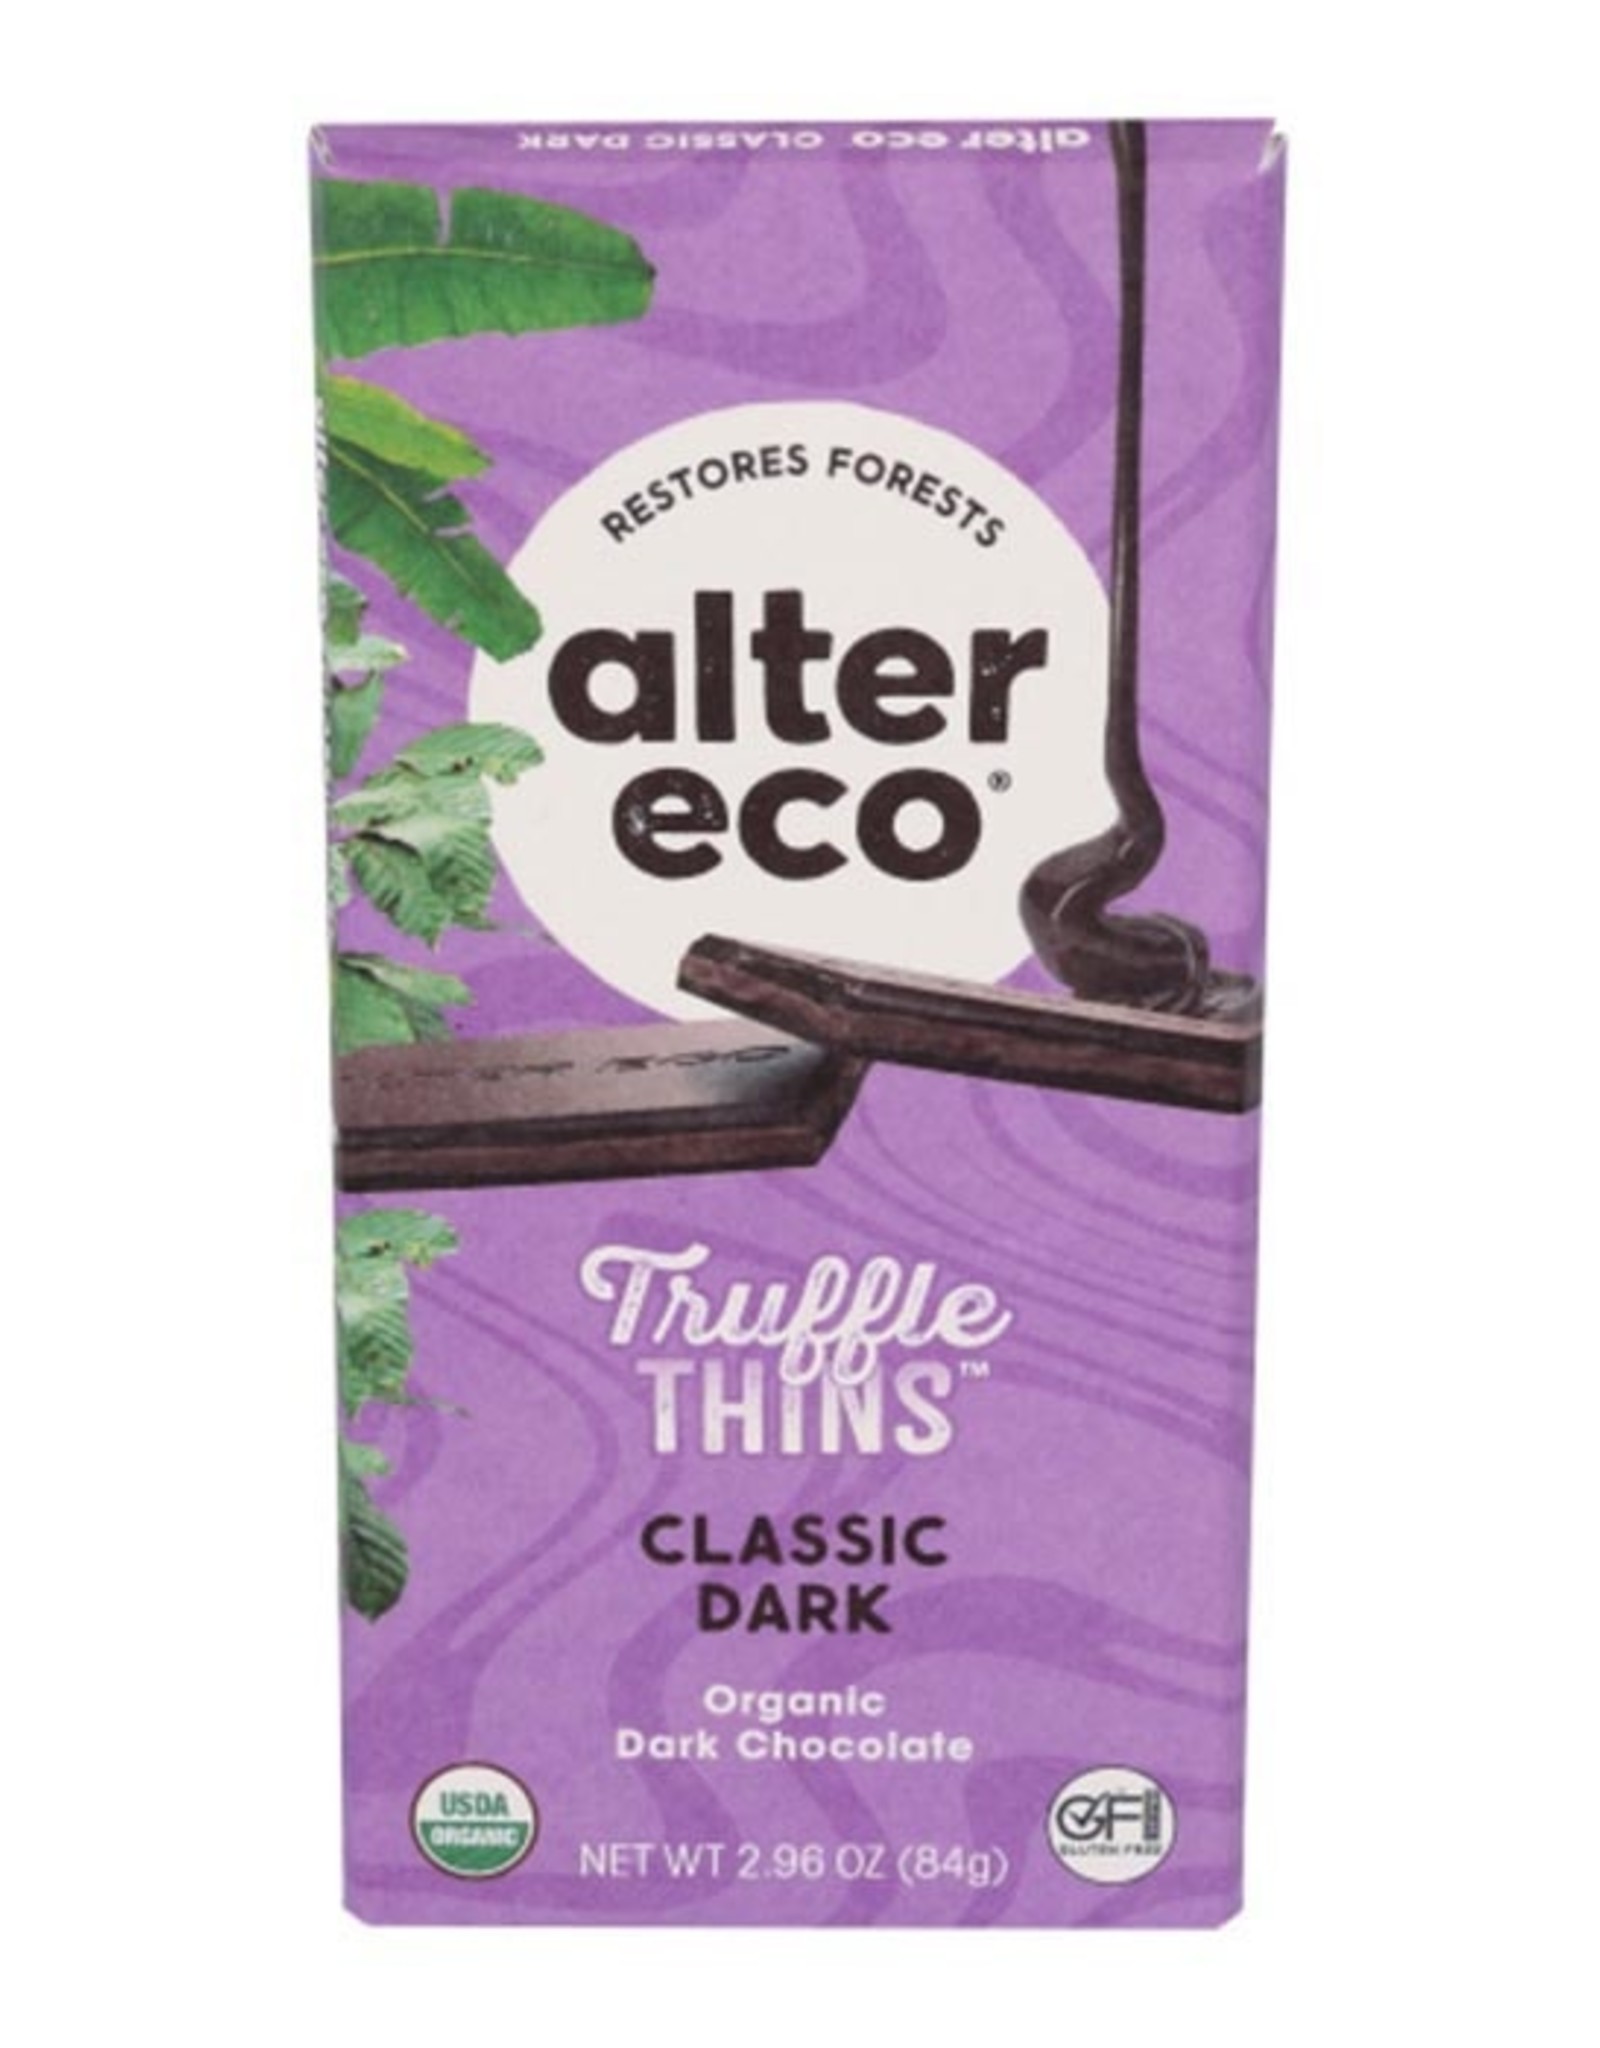 Alter Eco Classic Dark Chocolate Truffle Thins